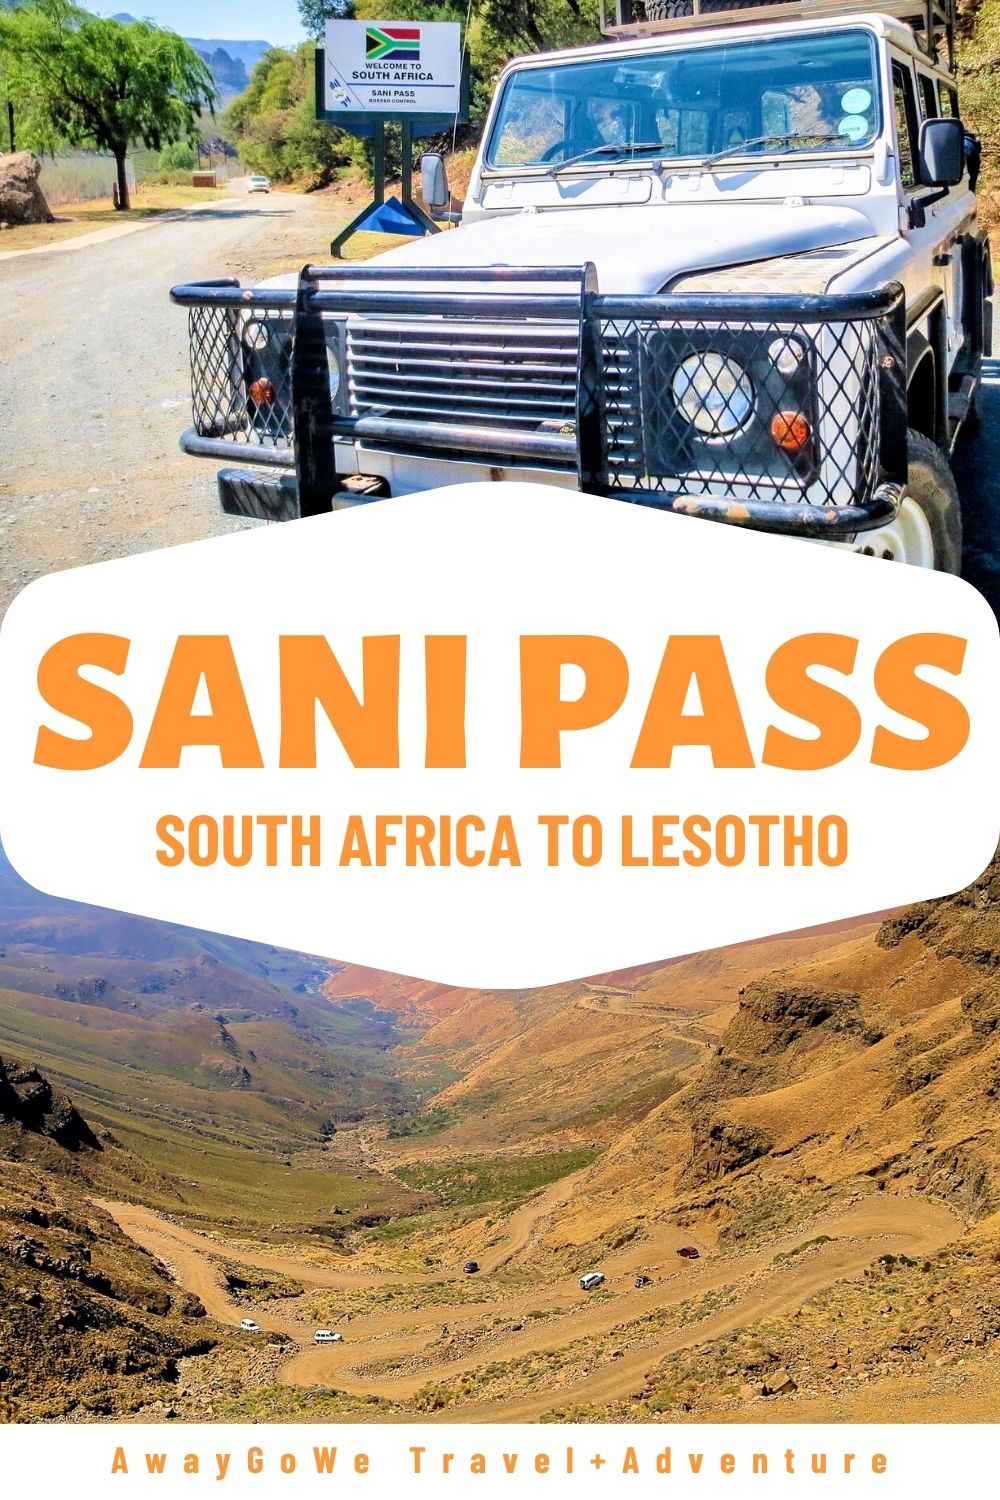 Sani Pass South Africa Lesohto